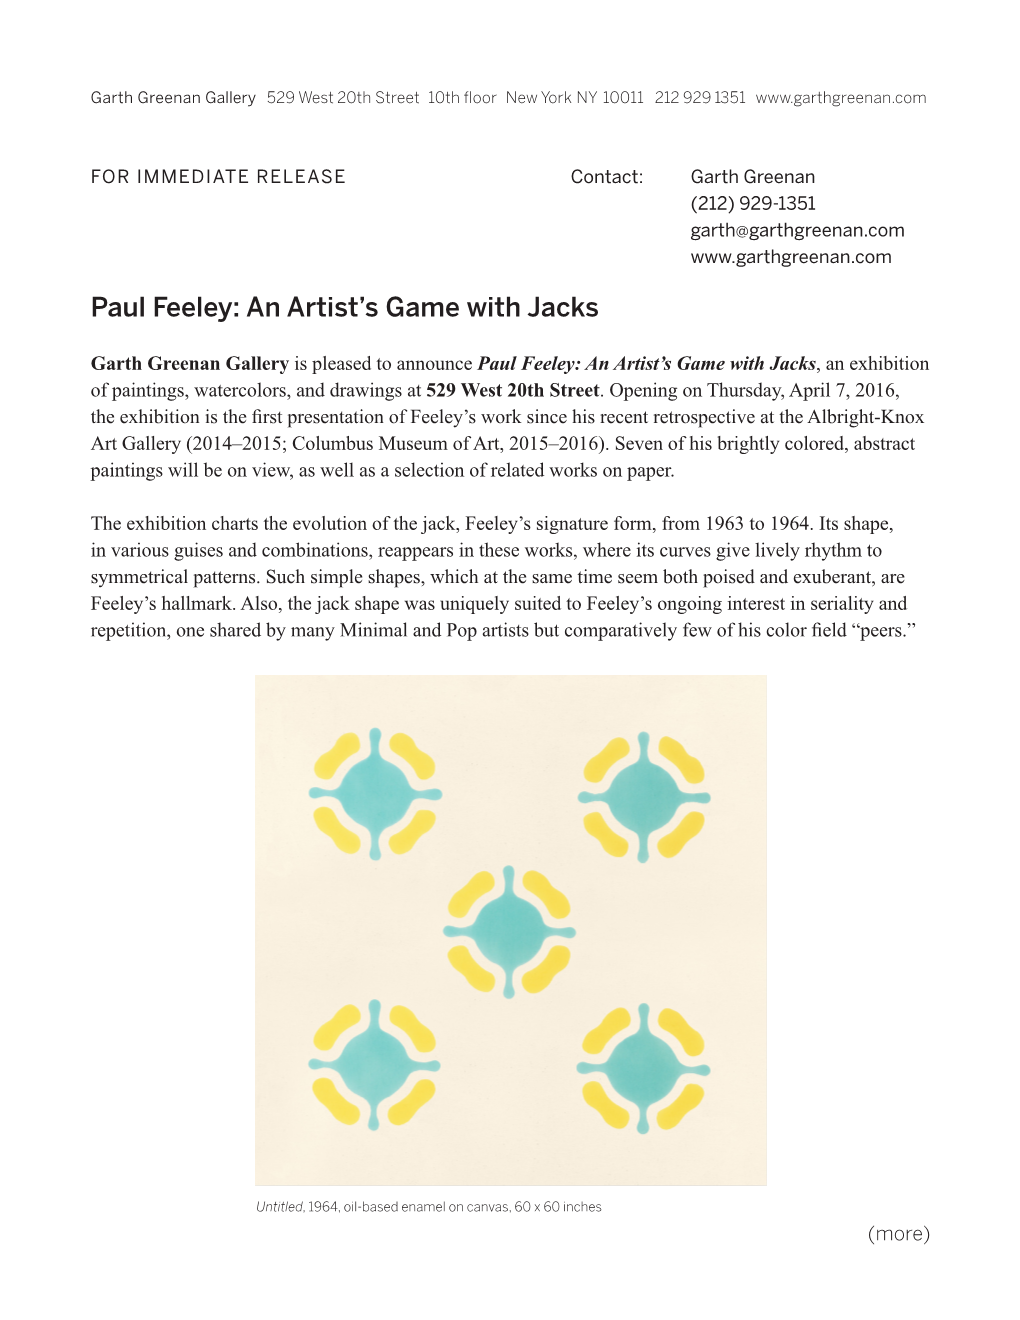 Paul Feeley: an Artist's Game with Jacks